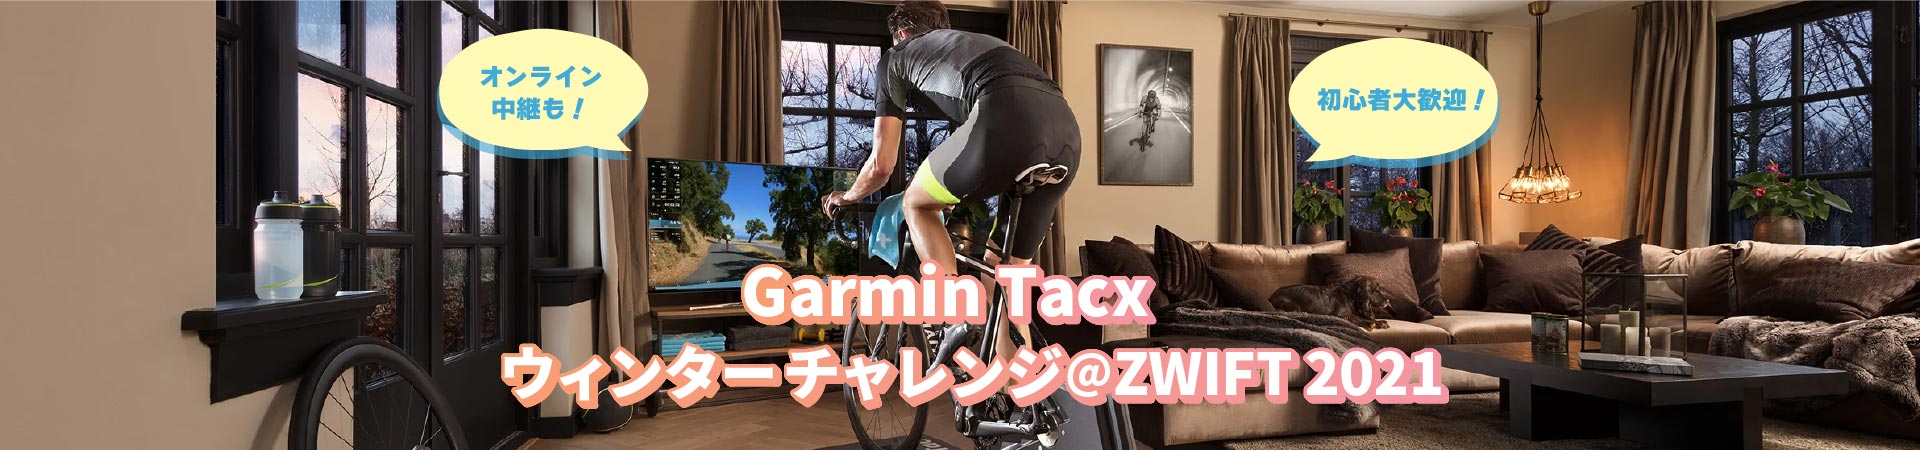 Garmin Tacx ウィンターチャレンジ@ZWIFT 2021